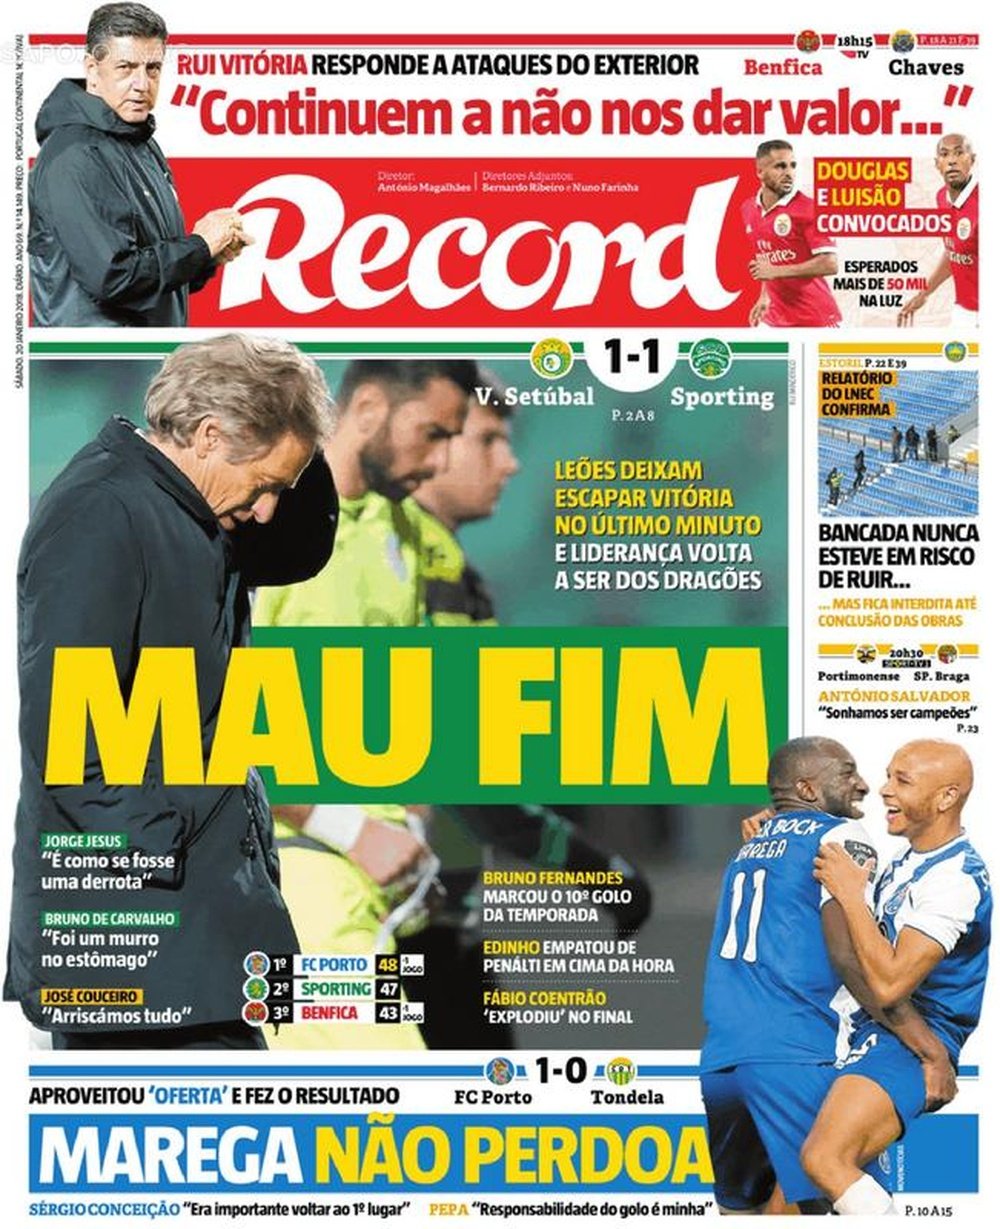 Capa do jornal 'Record', 20/01/2018. Record